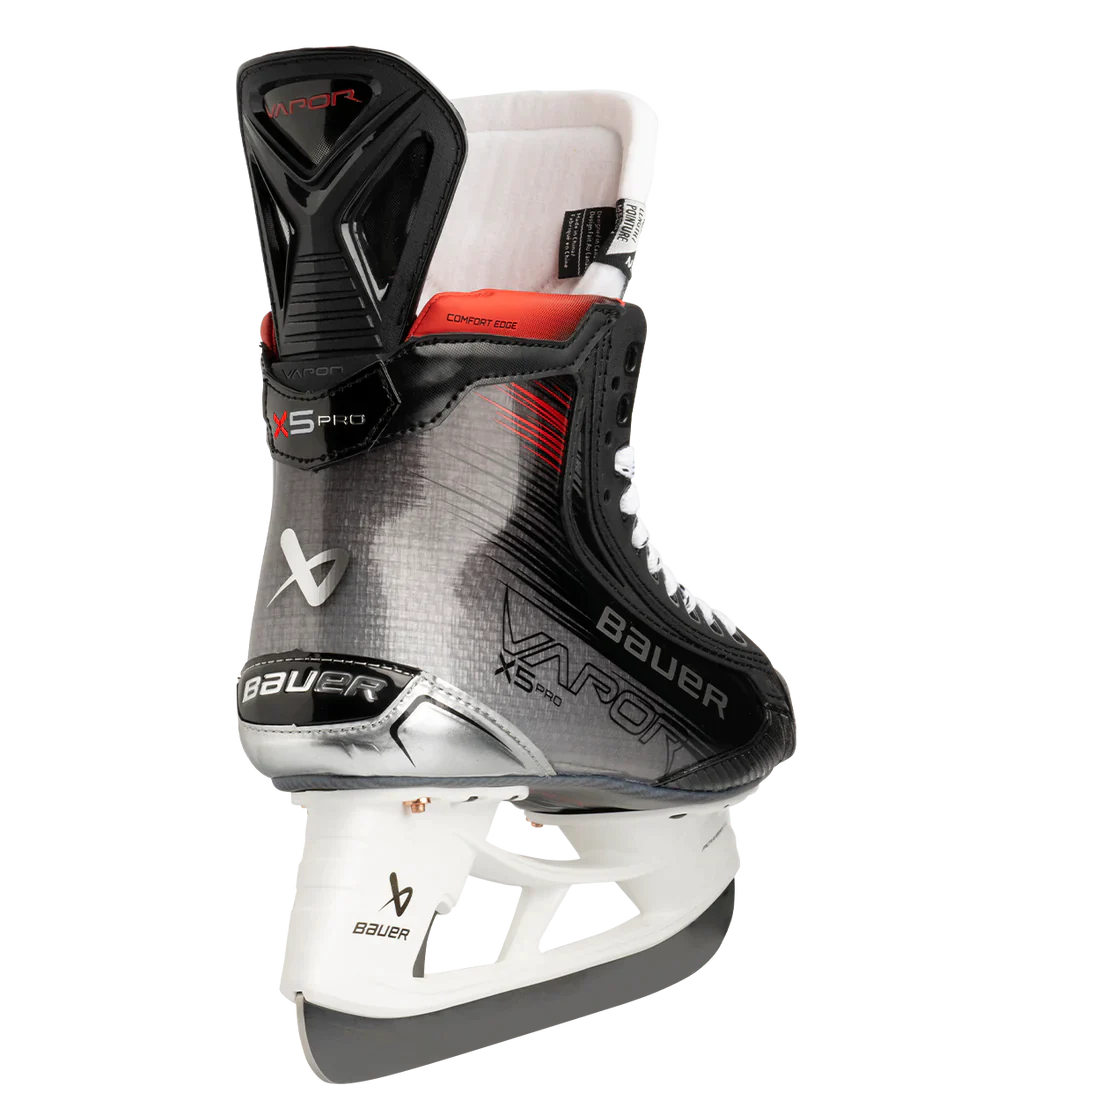 Bauer Vapor X5 Pro Ice Hockey Skate Intermediate